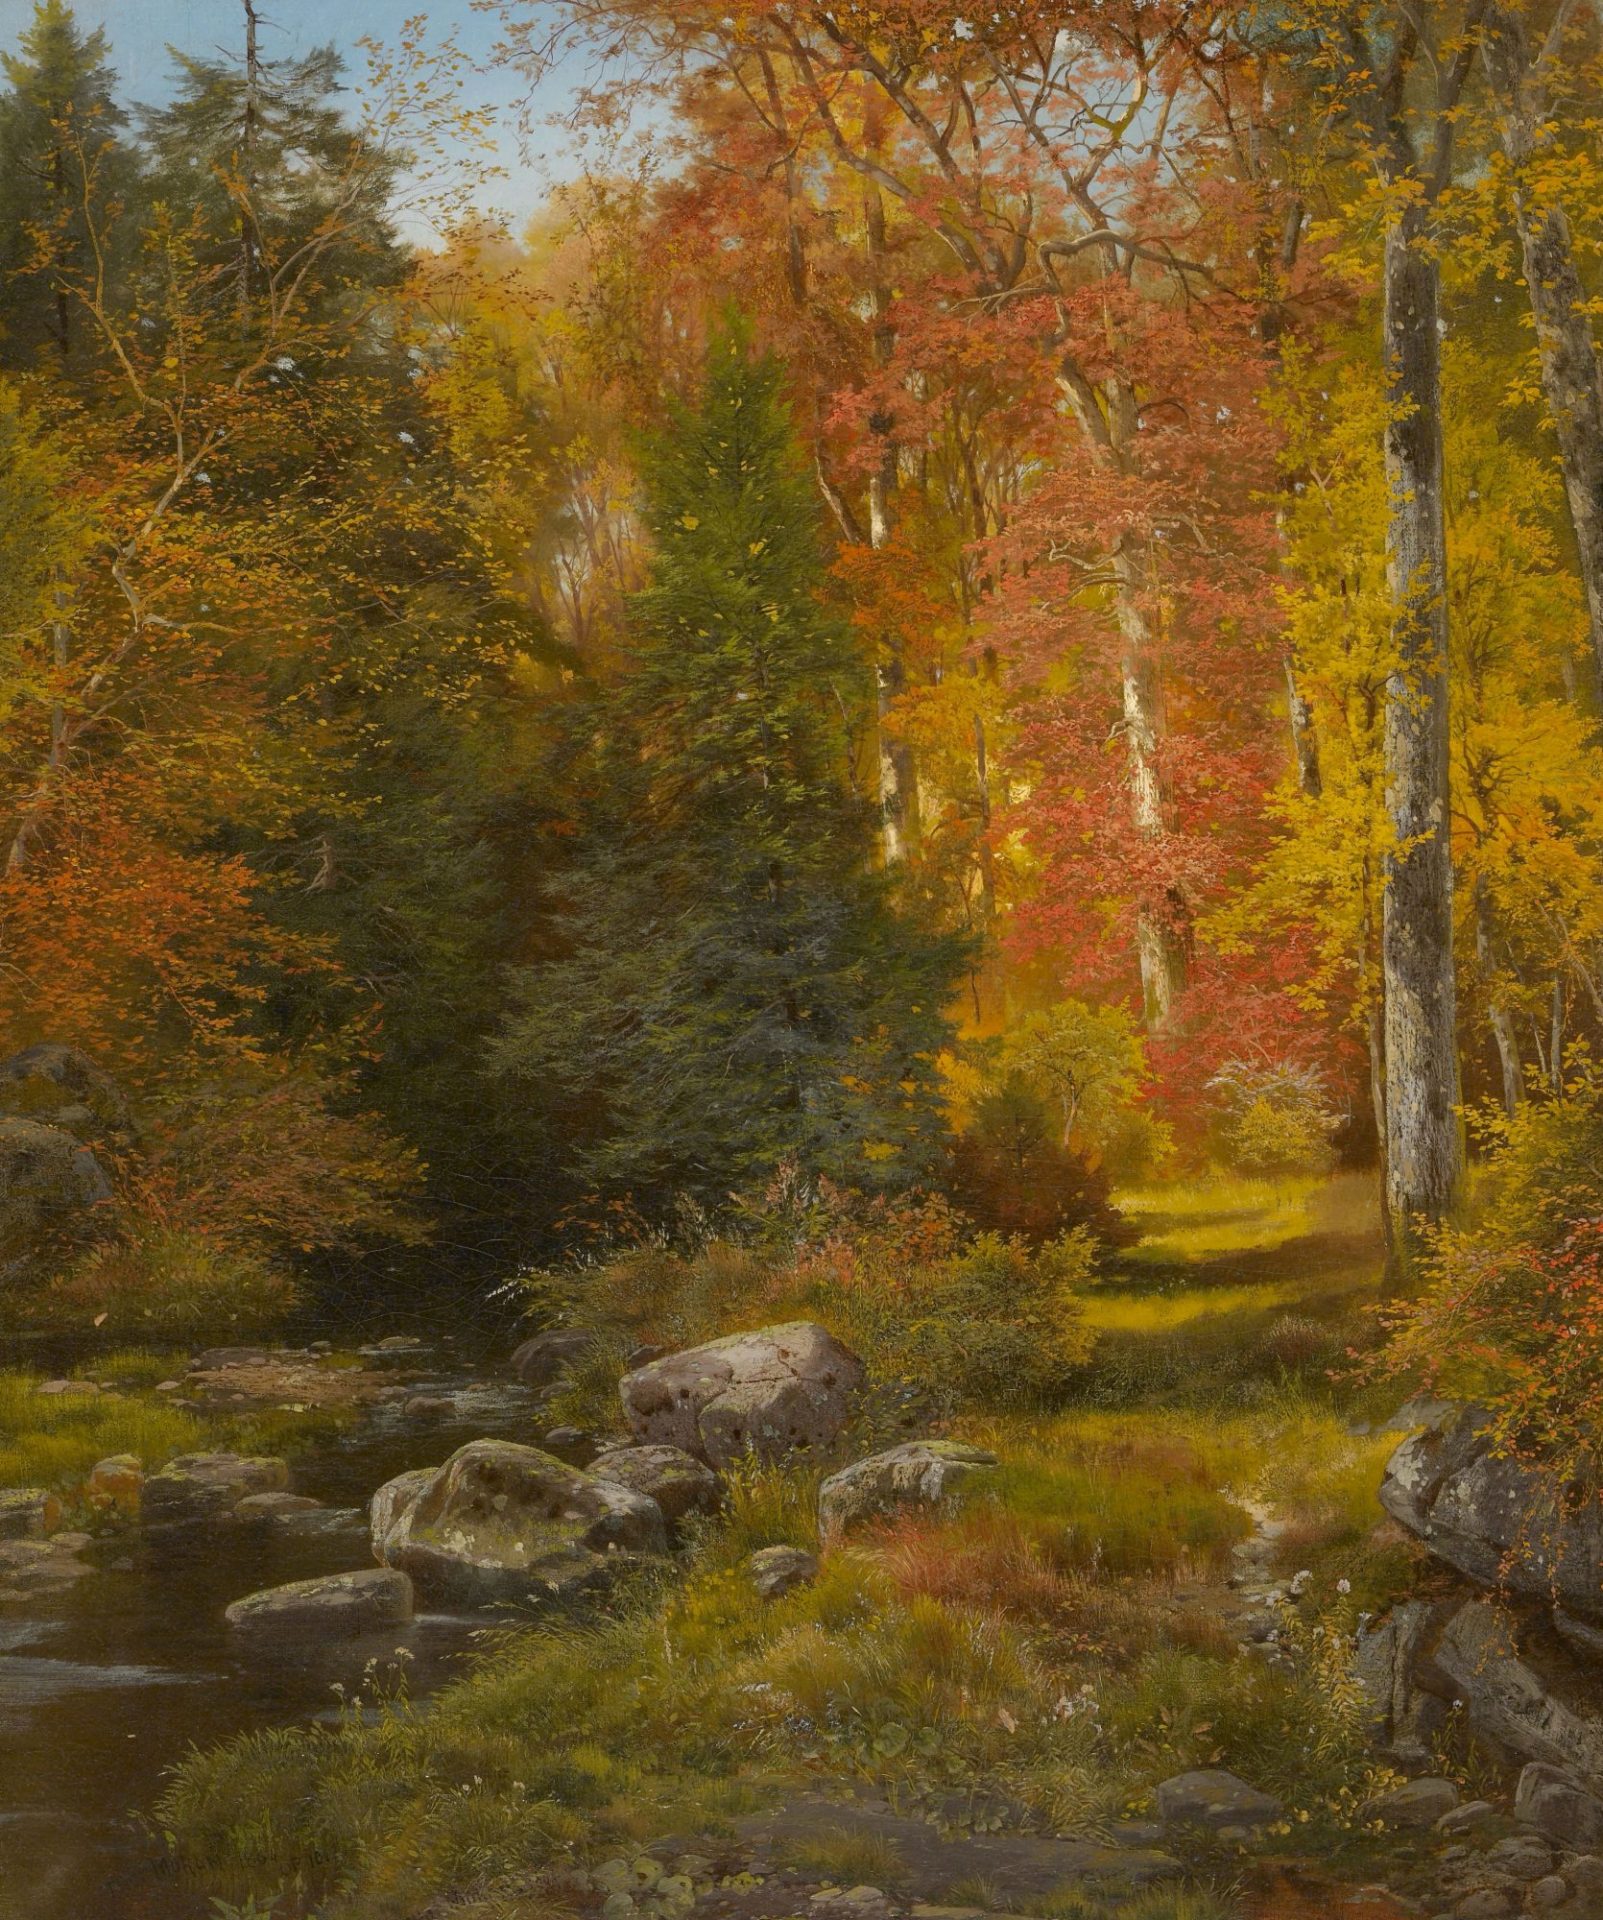 Collection Spotlight: Thomas Moran's "The Woods in Autumn"